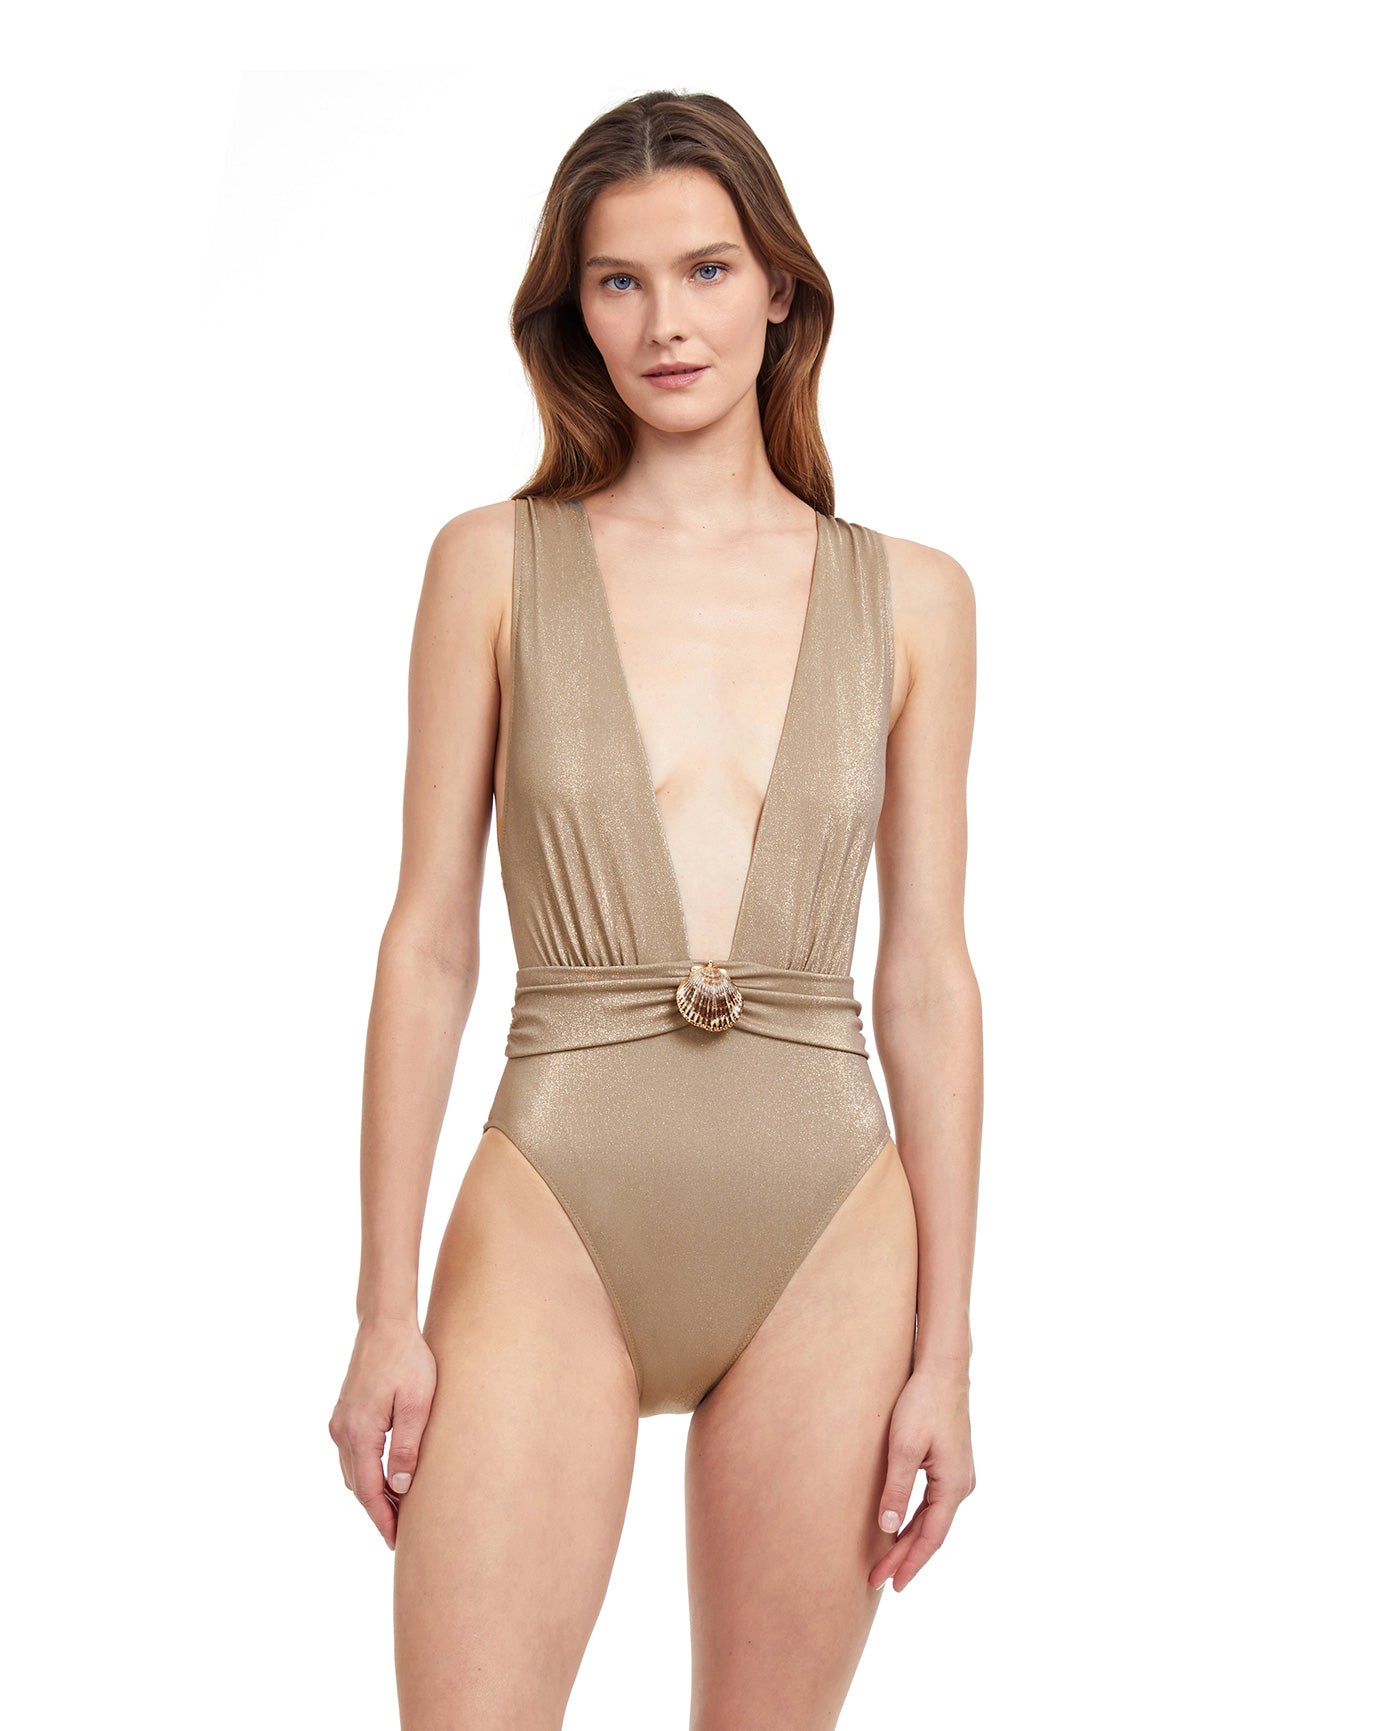 White Gottex Swimwear / Bathing Suit: Shop at $12.96+